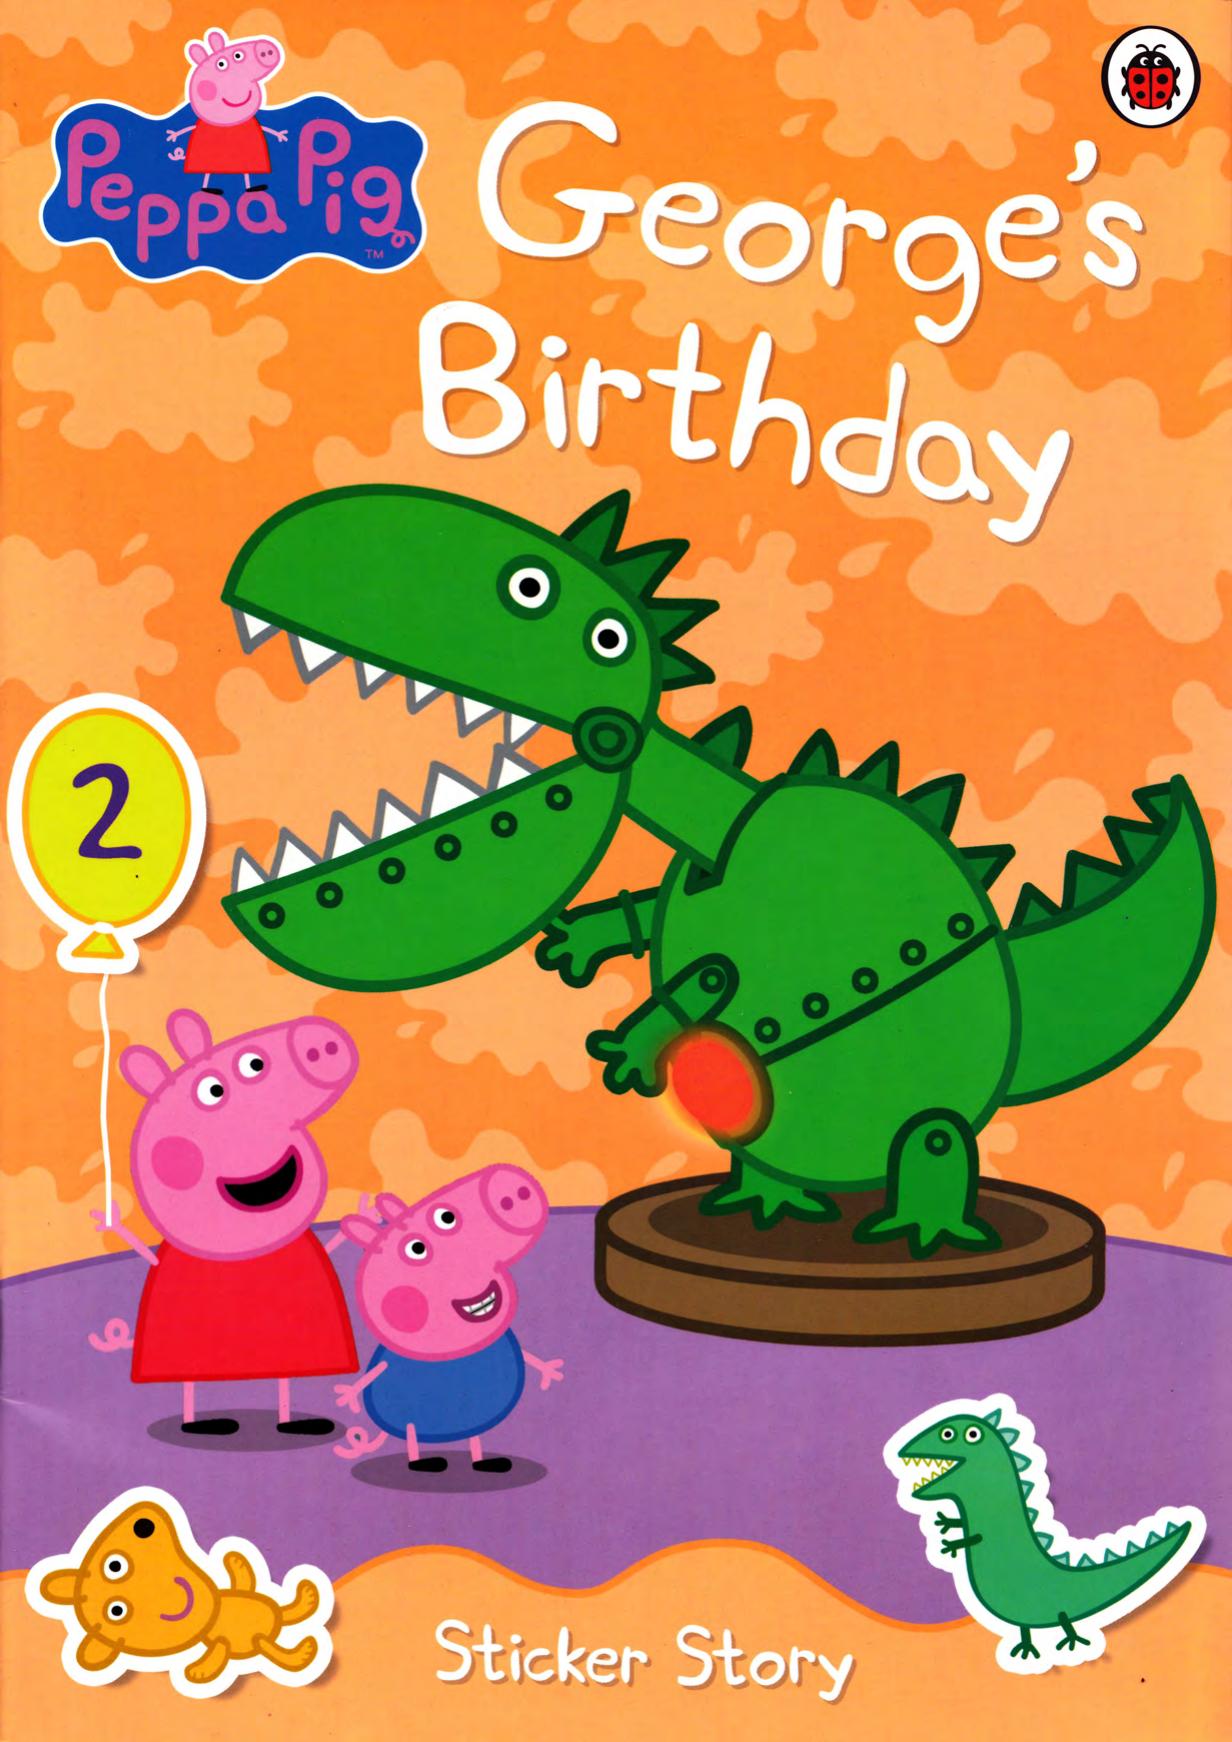 Peppa Pig - George's Birthday by Sticker Story